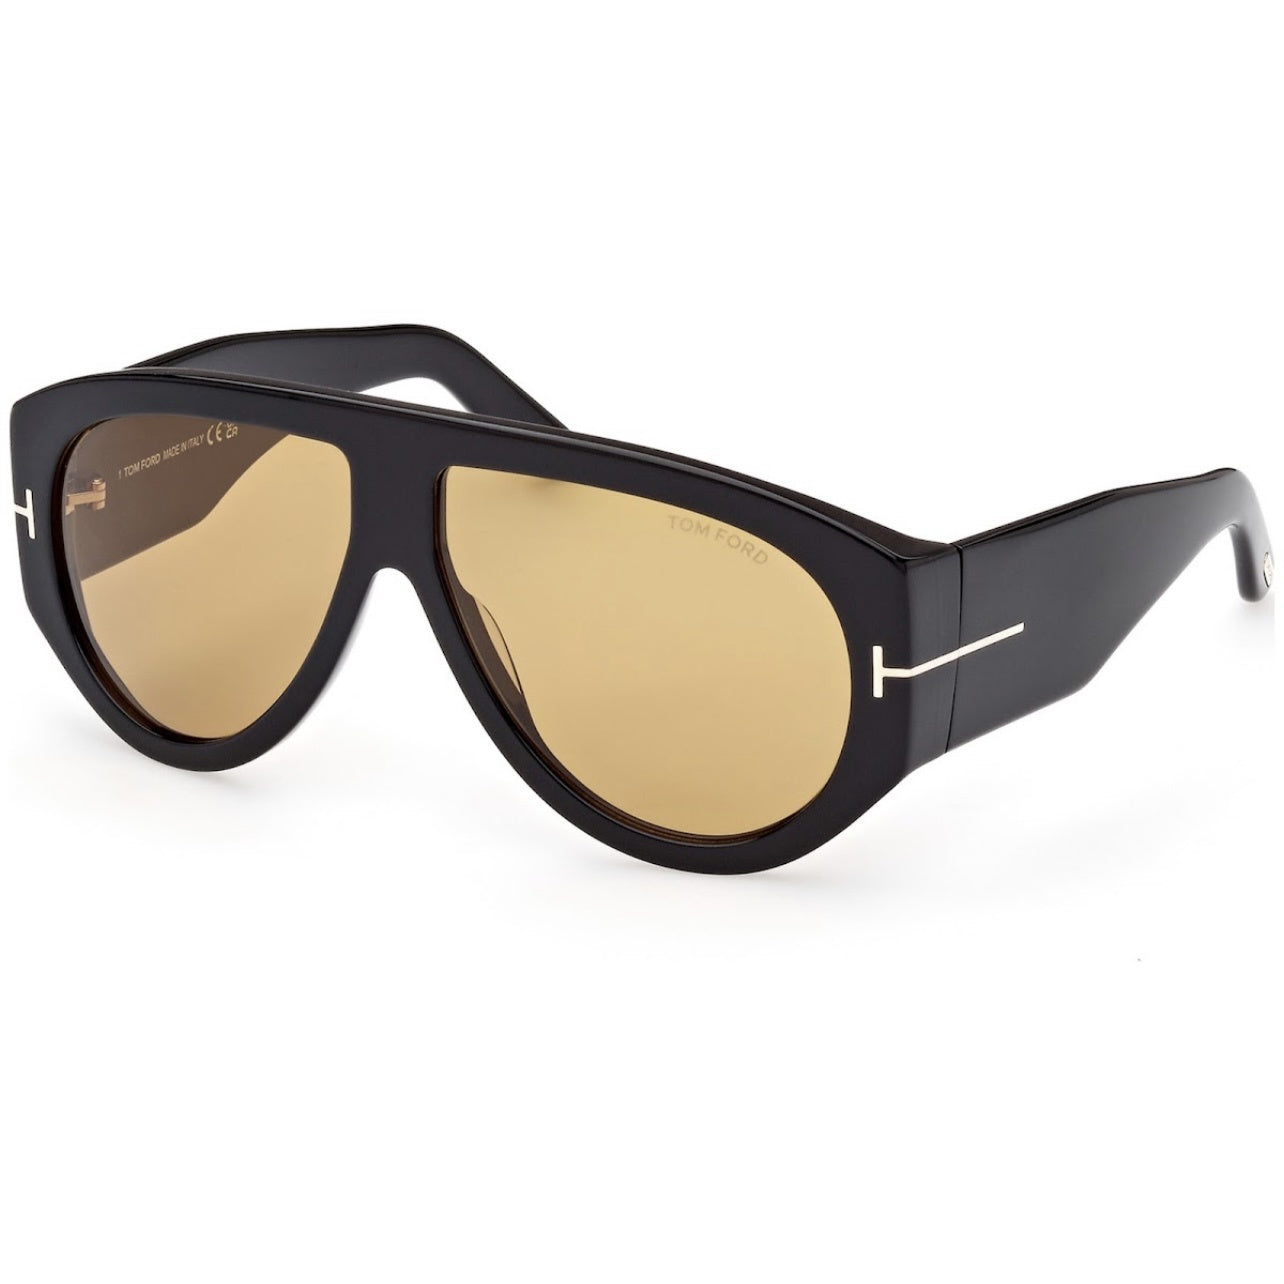 Tom Ford Sunglasses | Buy Tom Ford Sunglasses